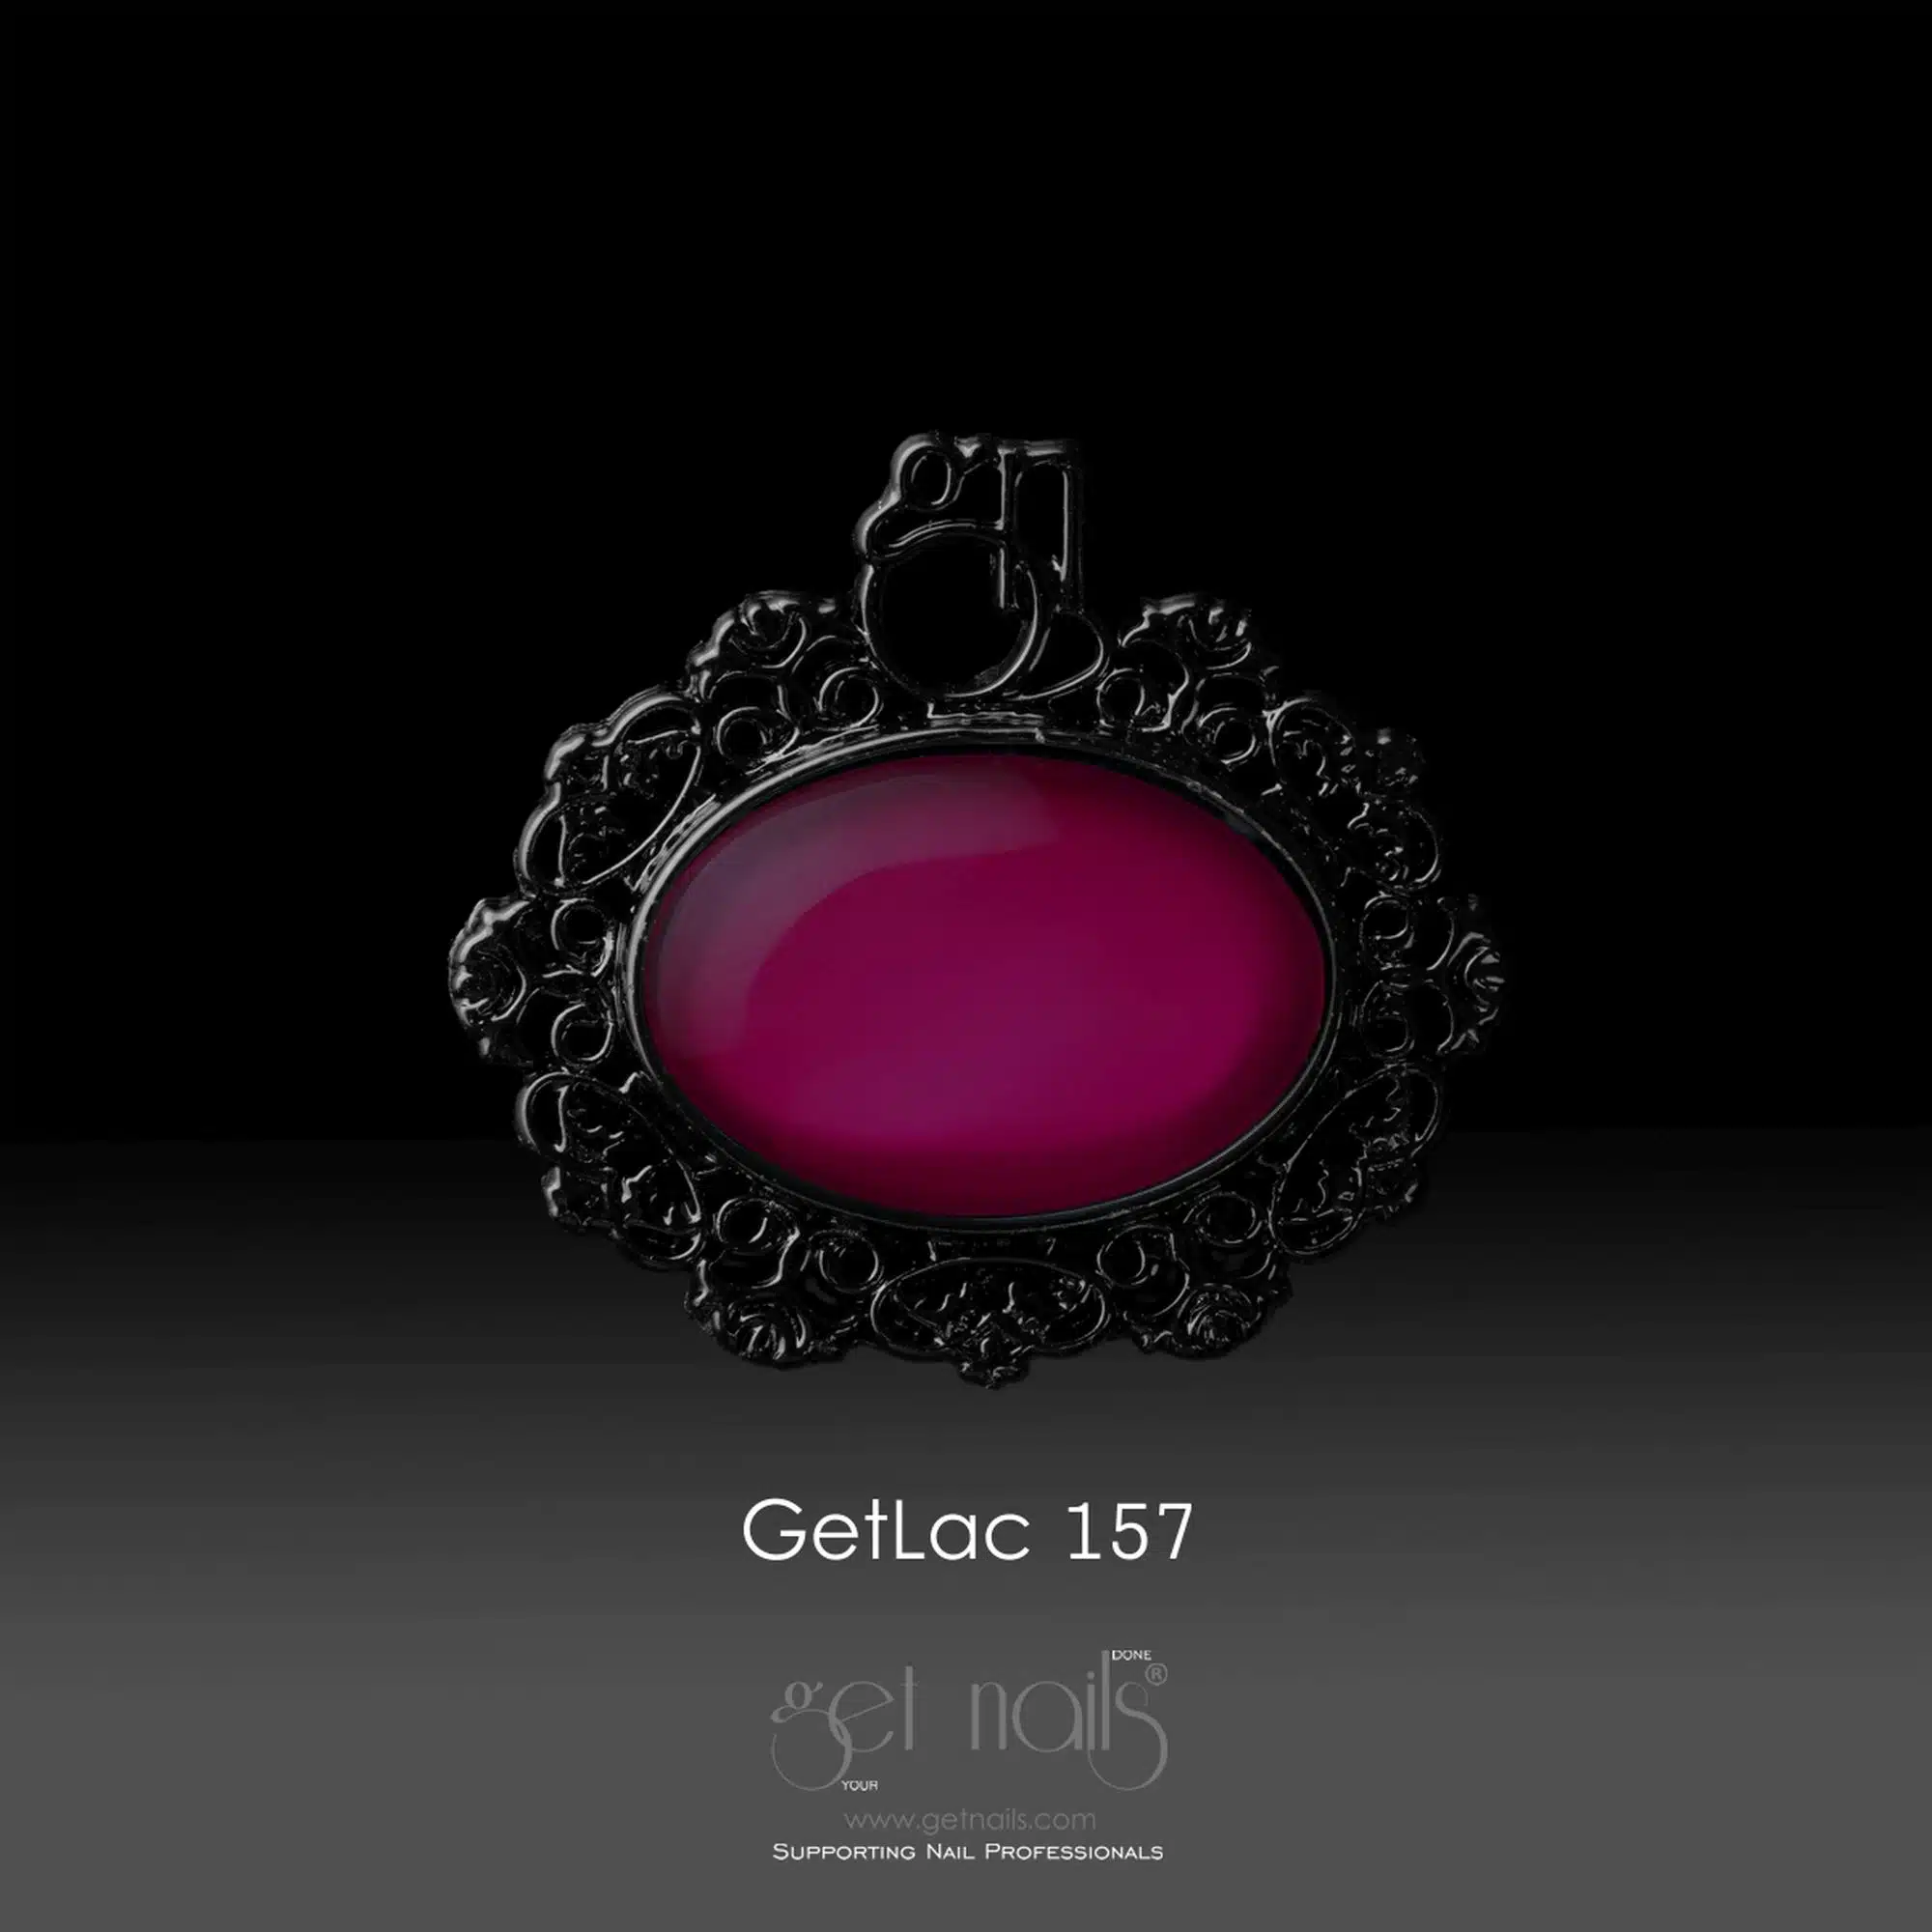 Get Nails Austria - GetLac 157 15 g